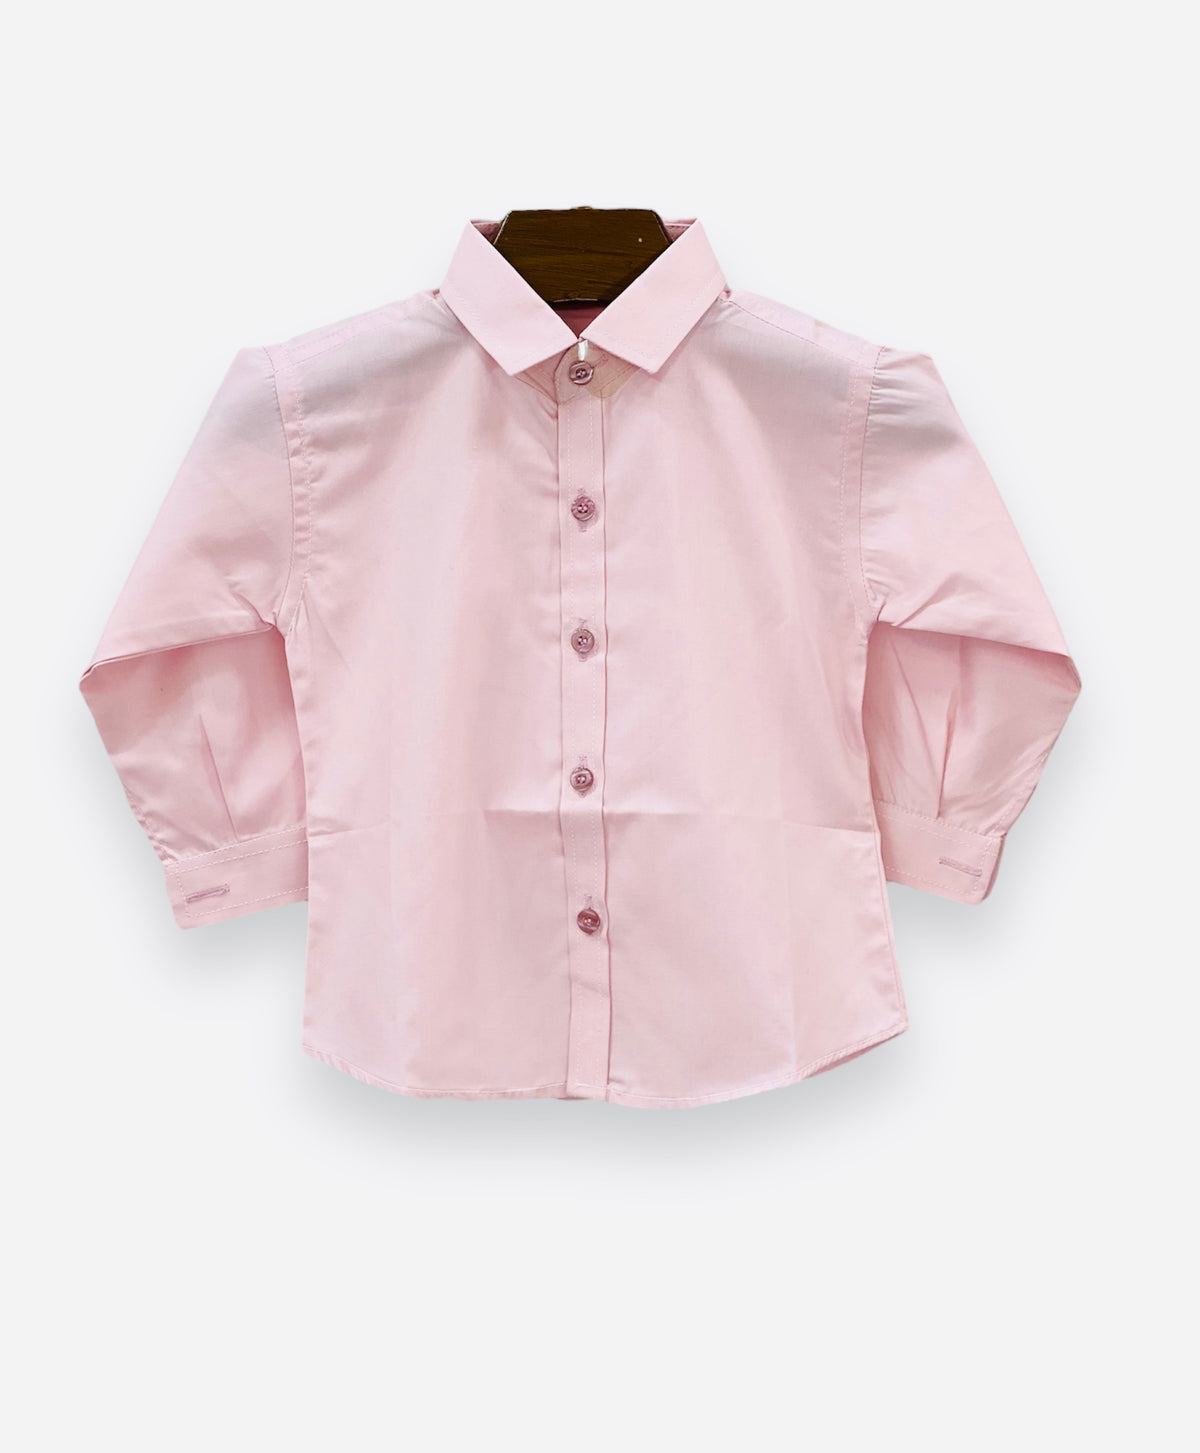 Plain Pink Formal Shirt